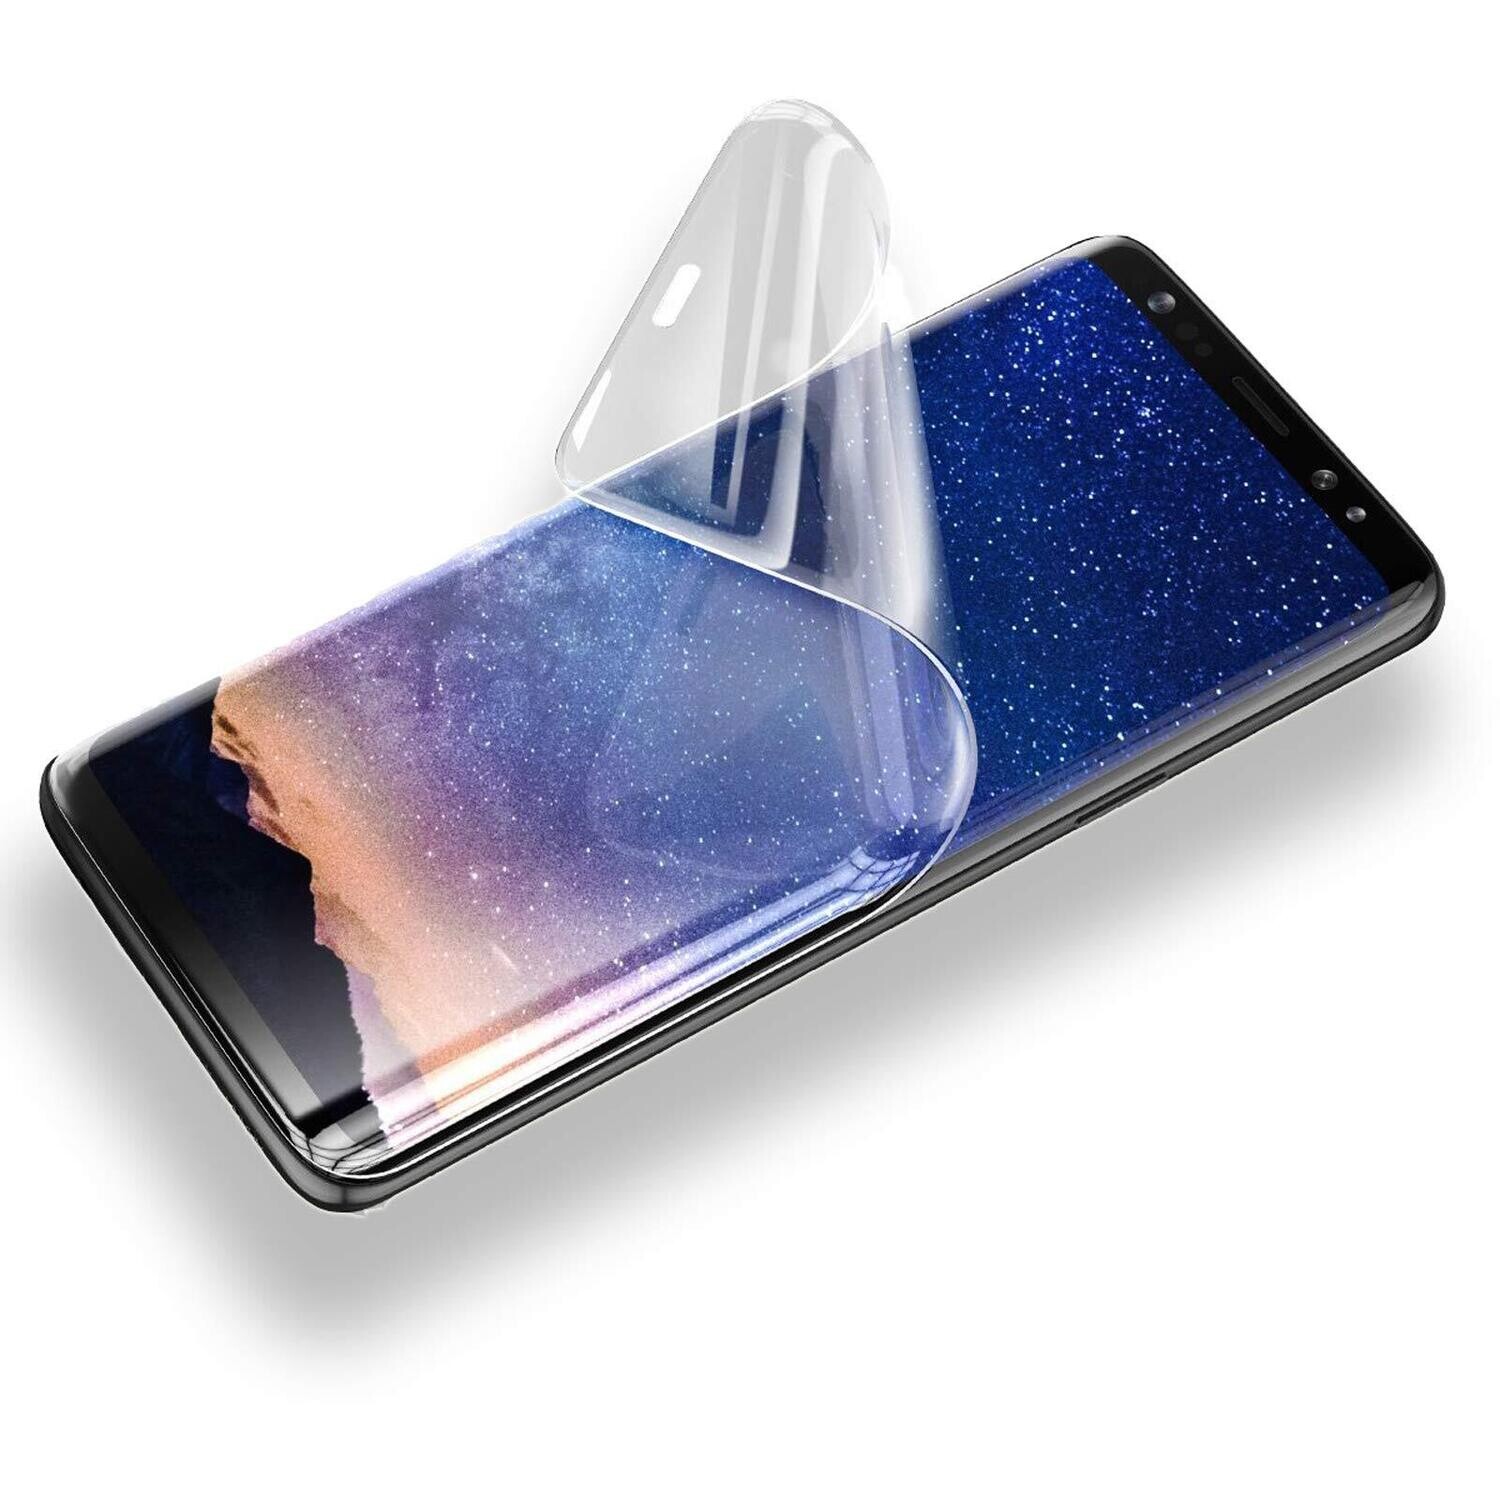 Samsung Galaxy M10s Premium Hydrogel Screen Protector [2 Pack]